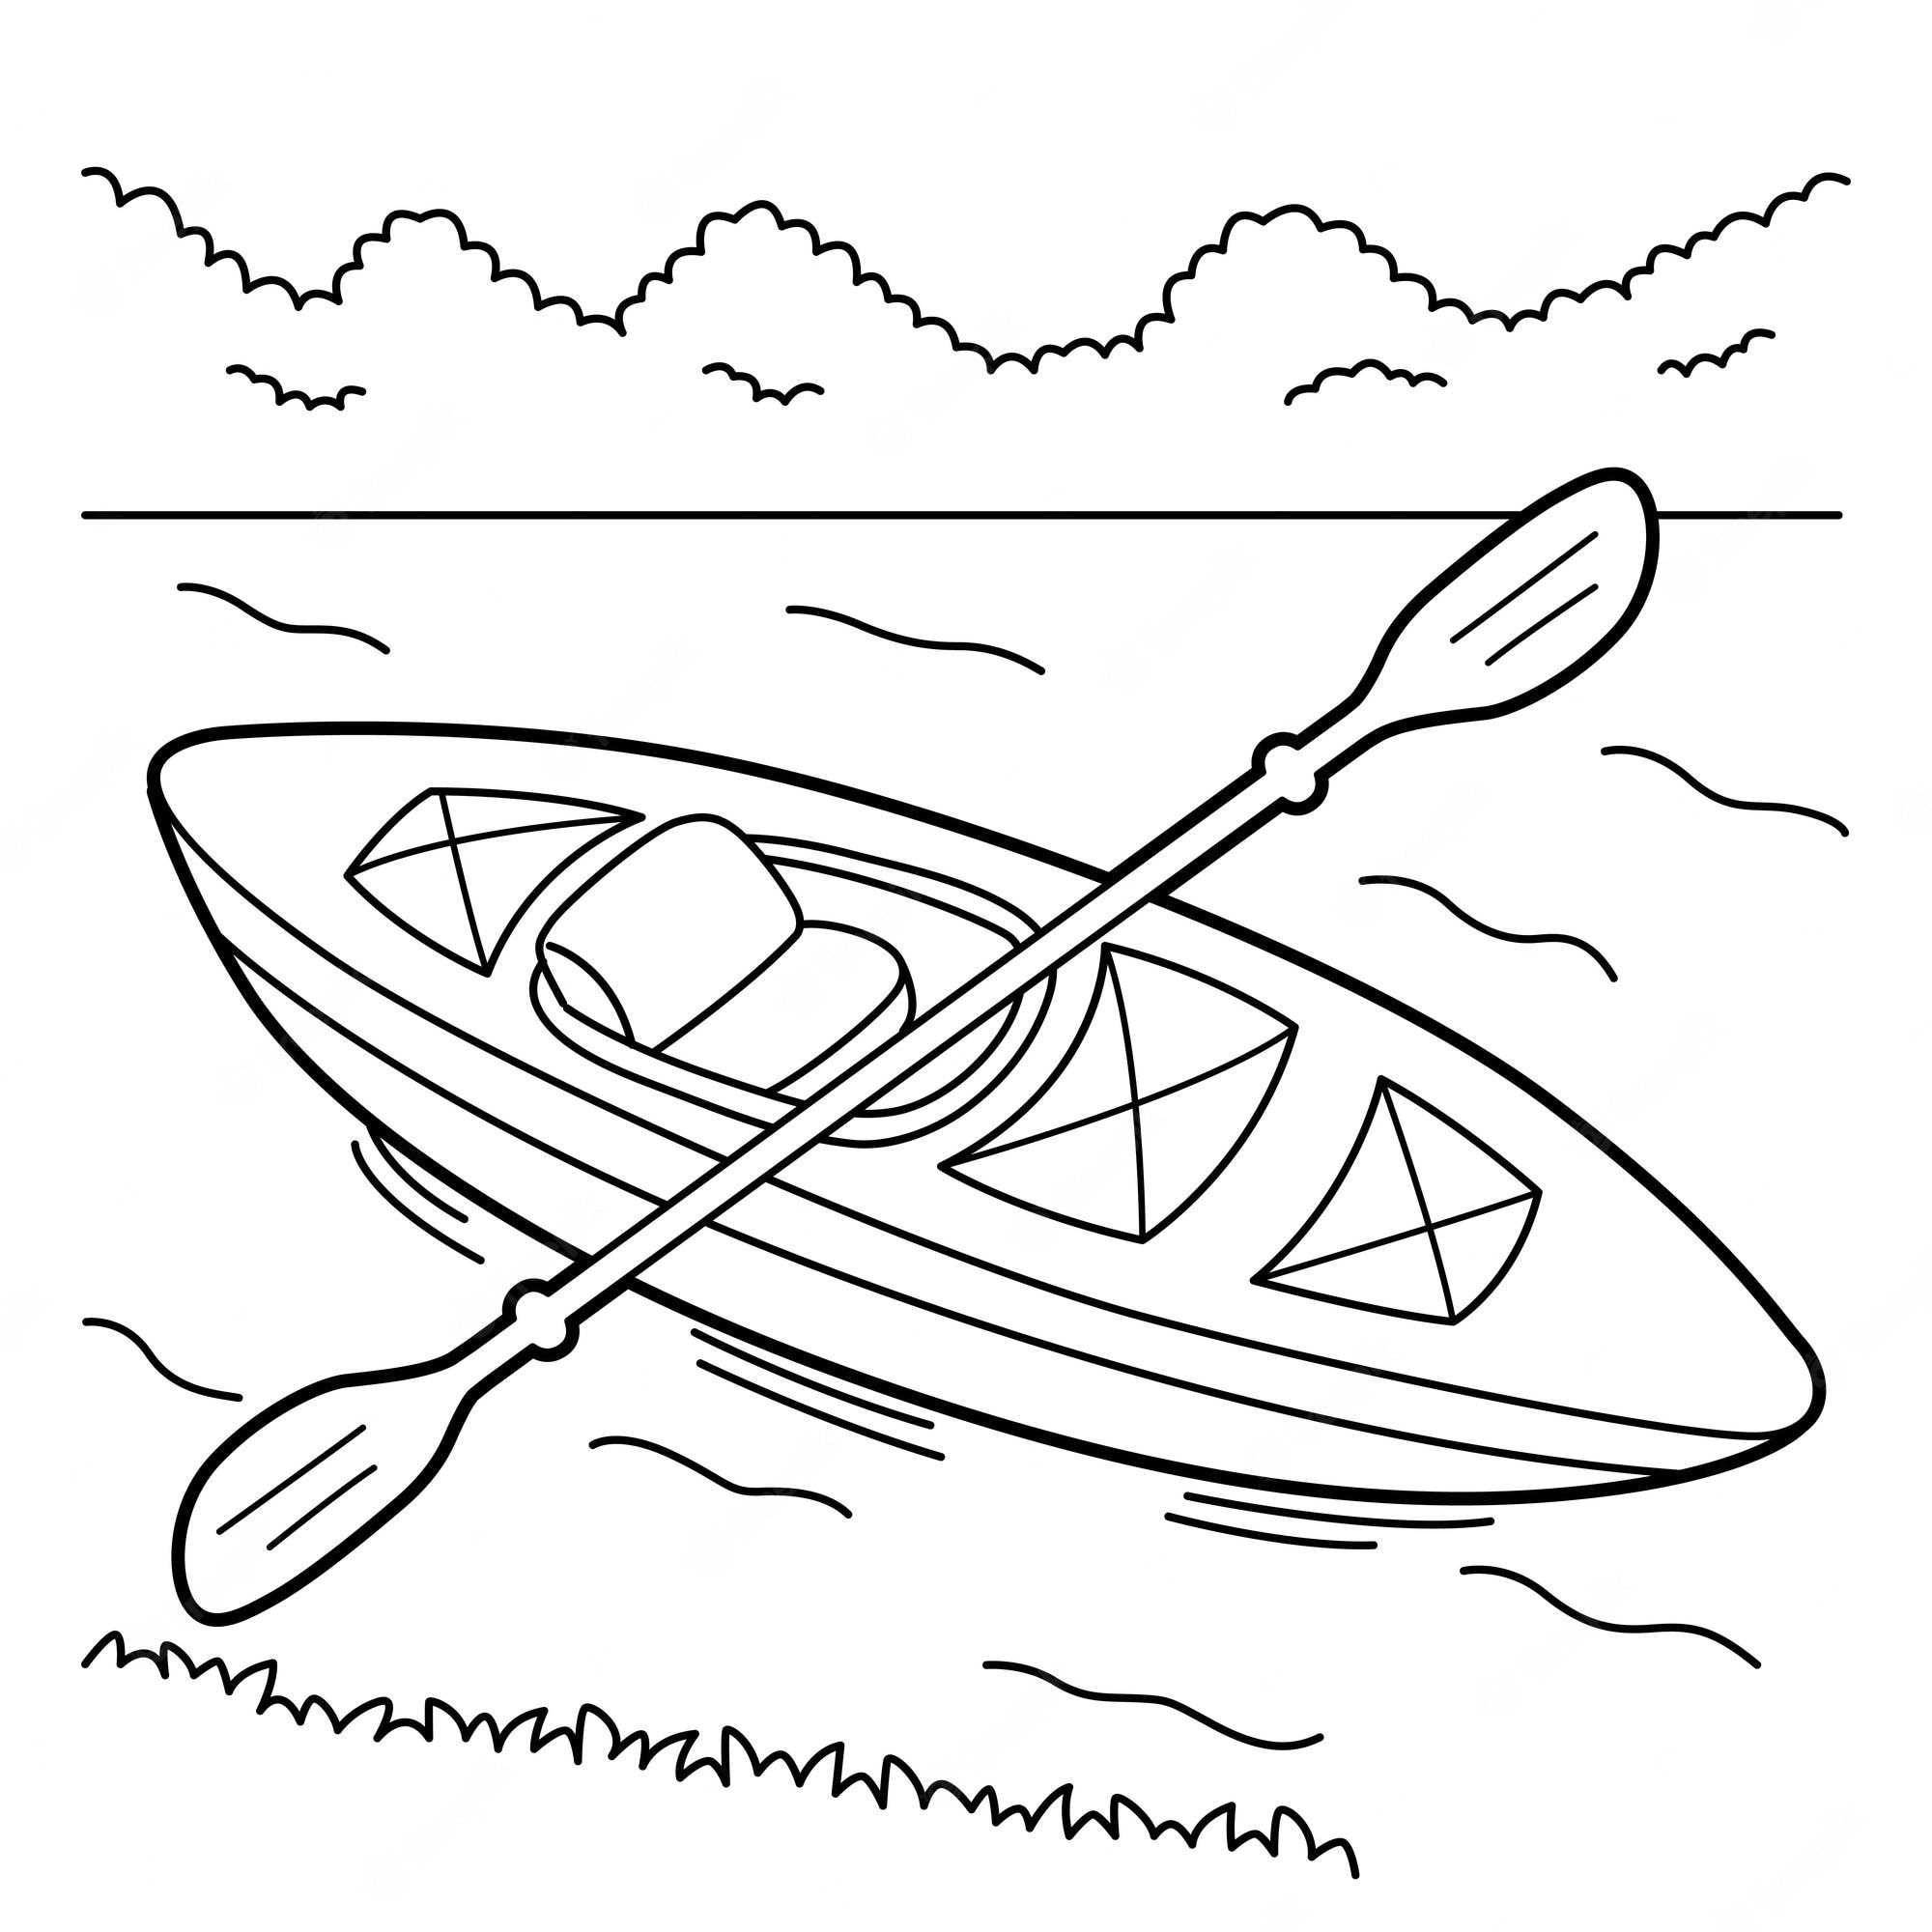 Premium Vector | Kayak vehicle coloring page for kids